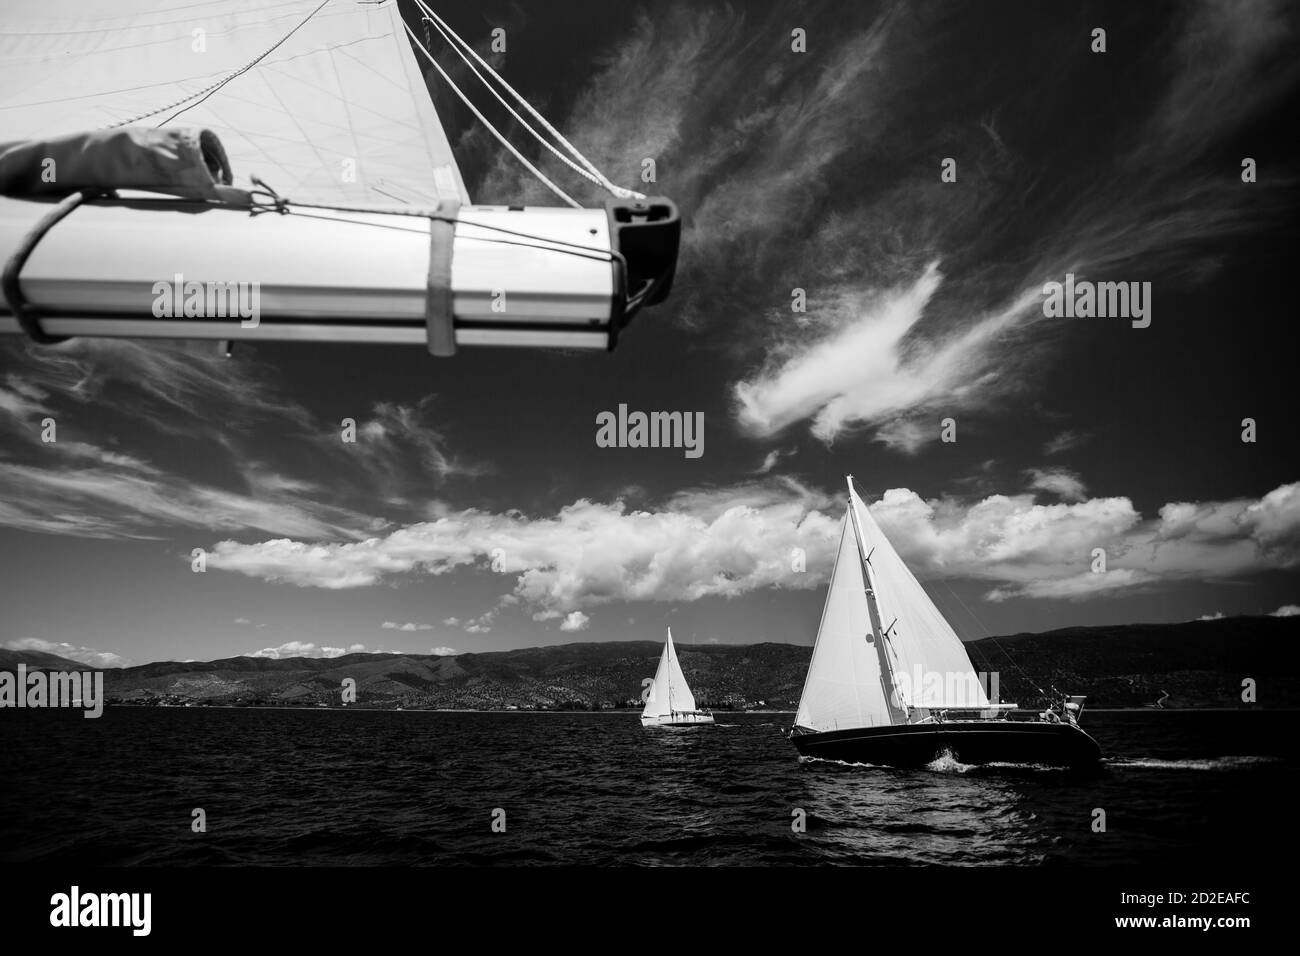 Boats in the regatta in the Aegean Sea. Luxury sailing. Black and white photo. Stock Photo